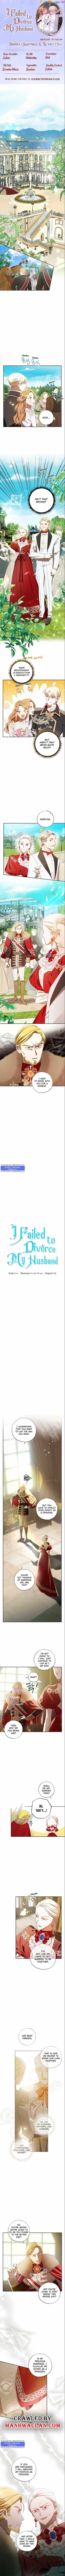 I Failed To Divorce My Husband - Page 1